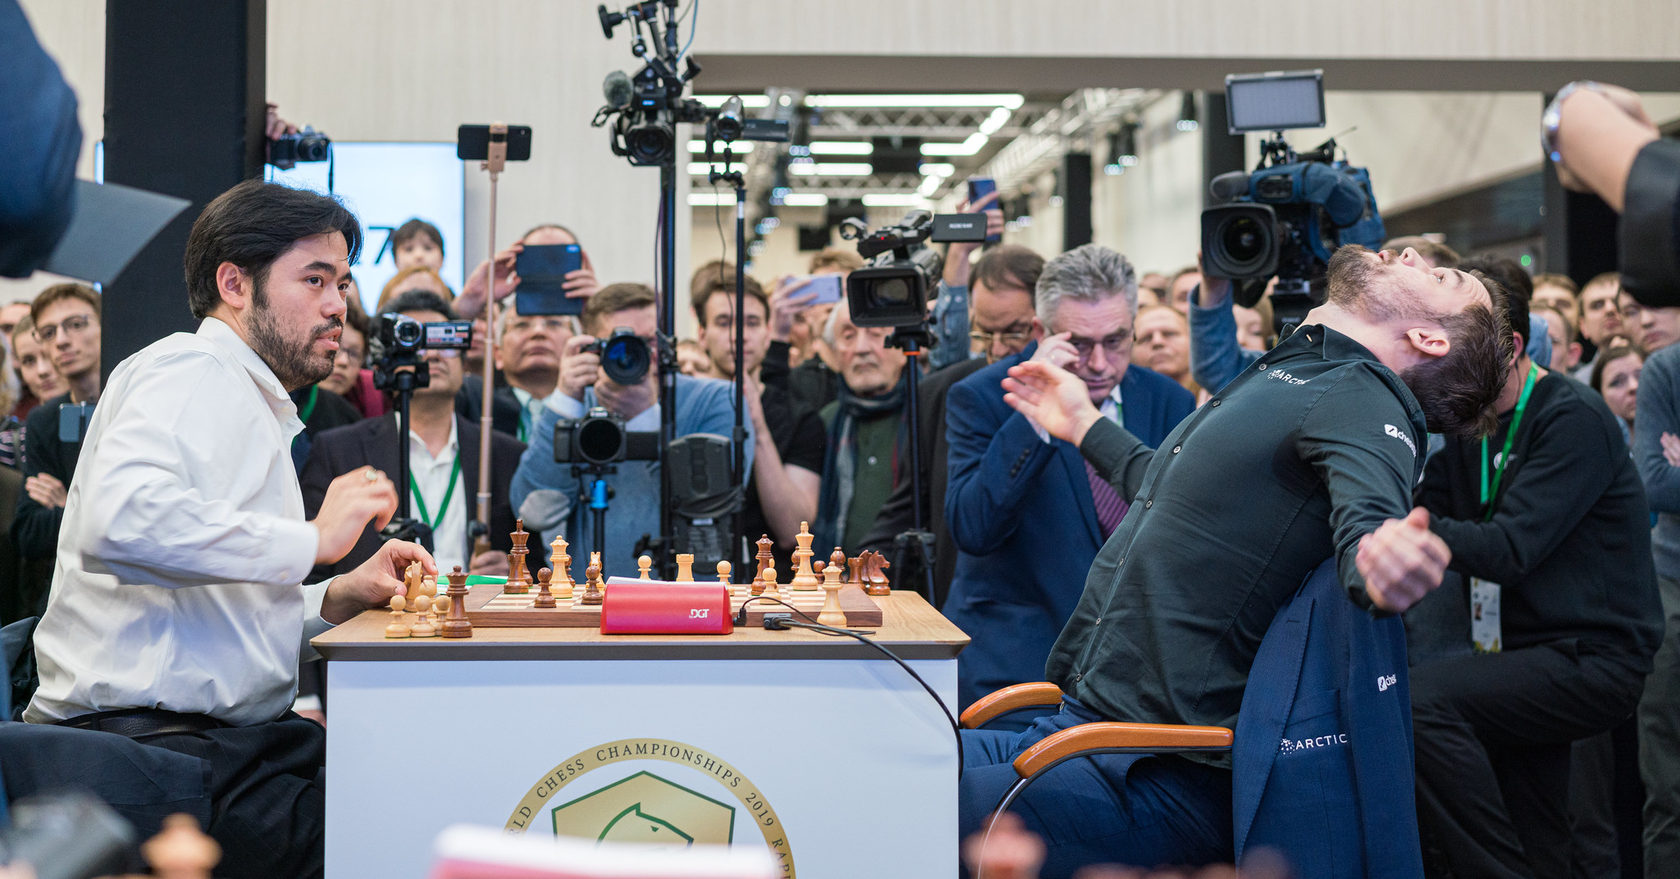 Magnus Carlsen and Kateryna Lagno win the World Blitz Chess Championship